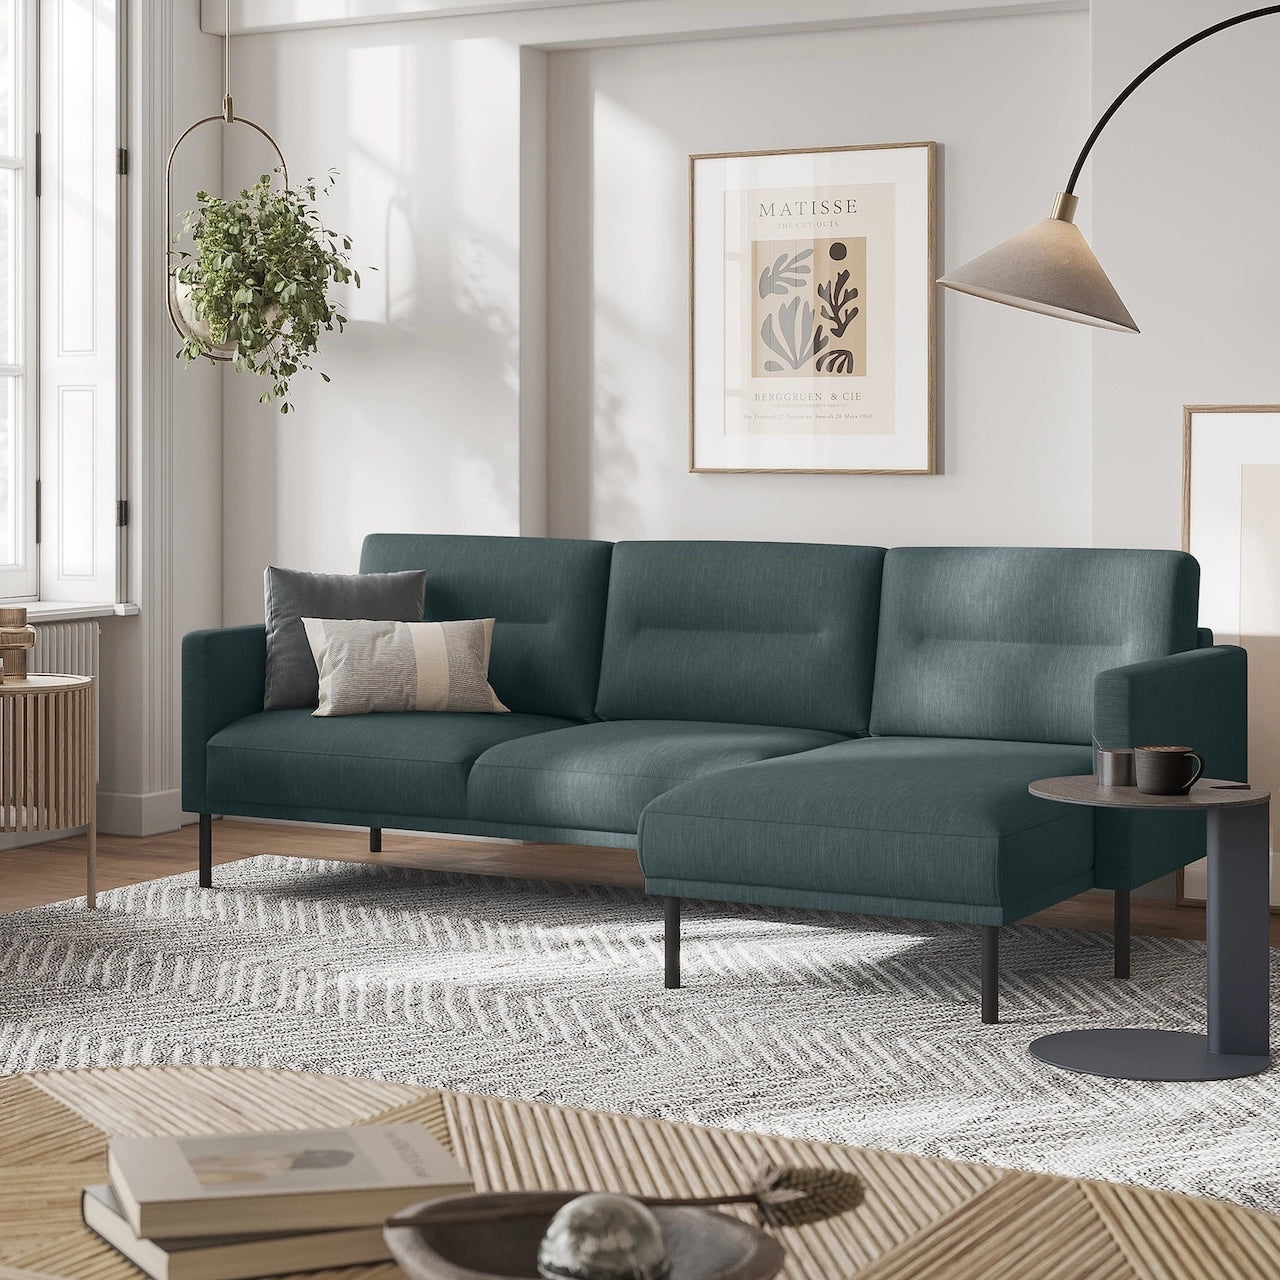 Furniture To Go Larvik Chaiselongue Sofa (RH) - Dark Green, Black Legs